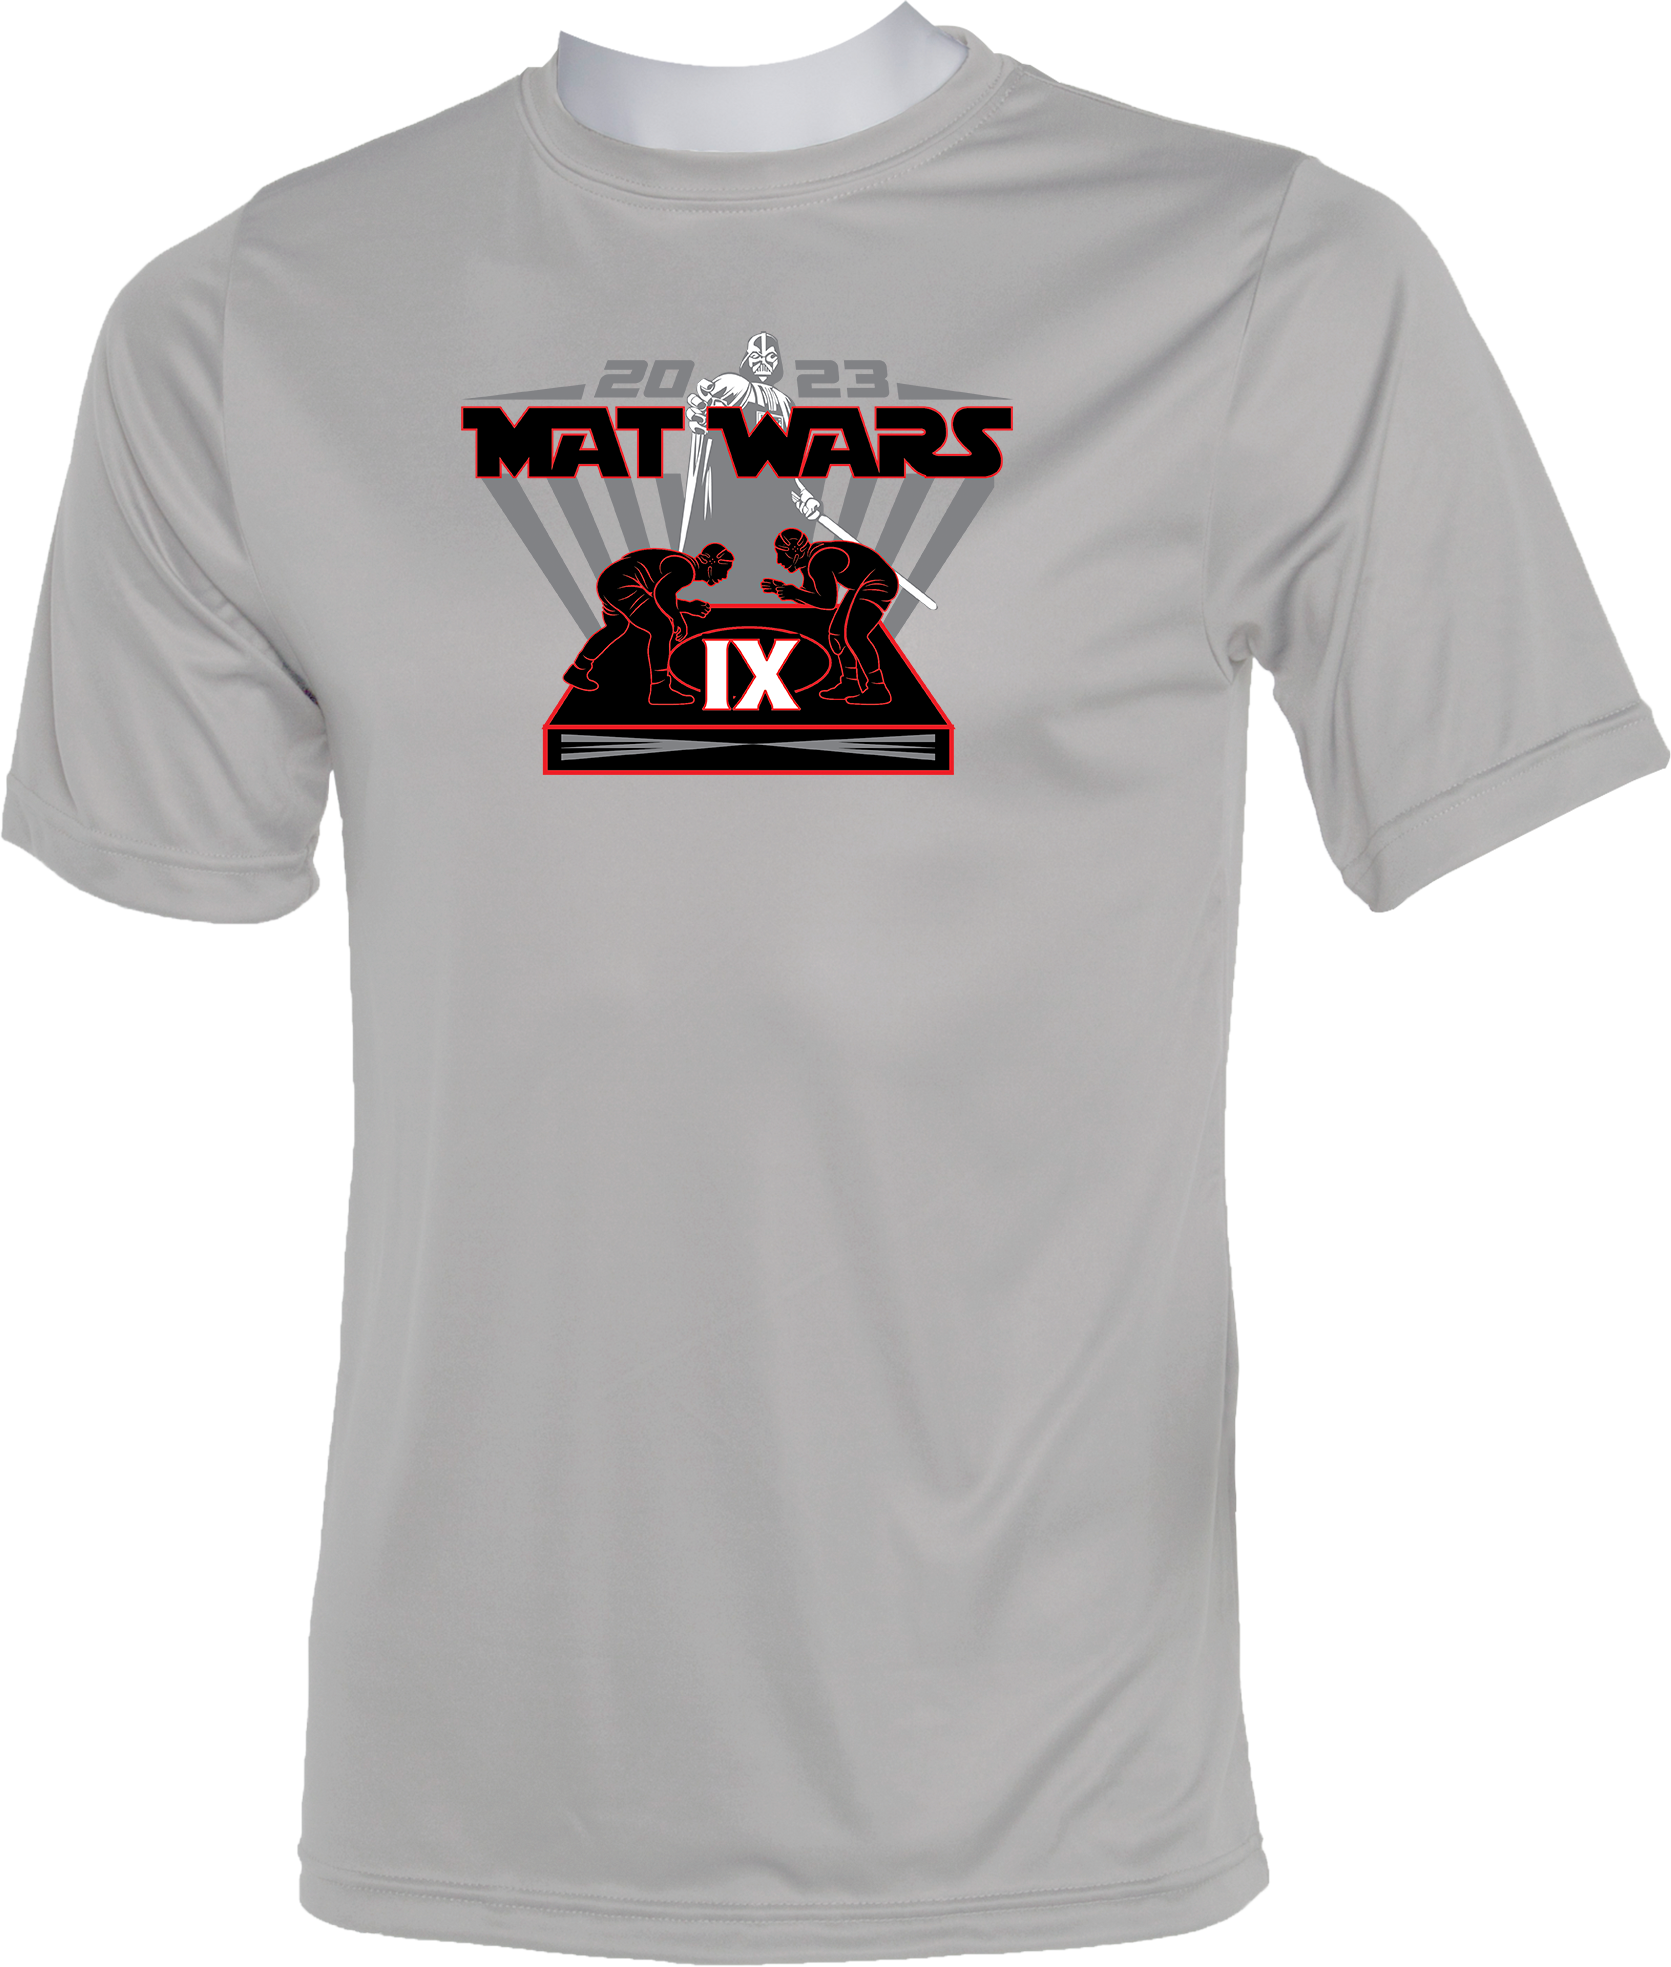 PERFORMANCE SHIRTS - 2023 Mat Wars IX